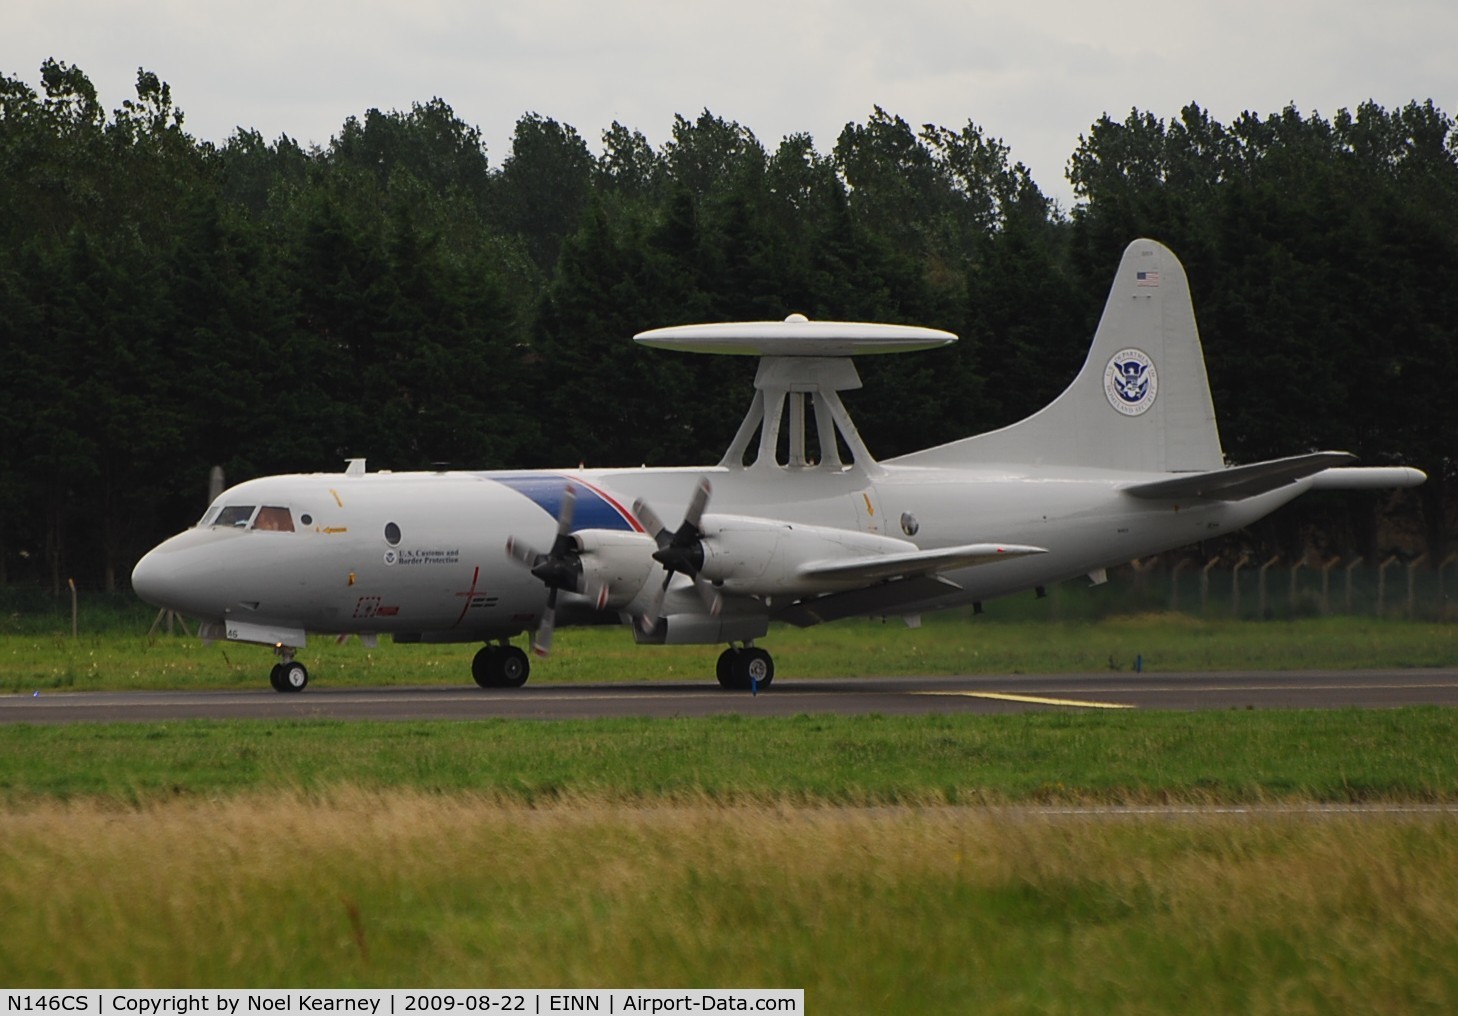 N146CS, 1968 Lockheed P-3B Orion C/N 185-5286, Awaiting line up clearance on Rwy 24 - nice visitor!!